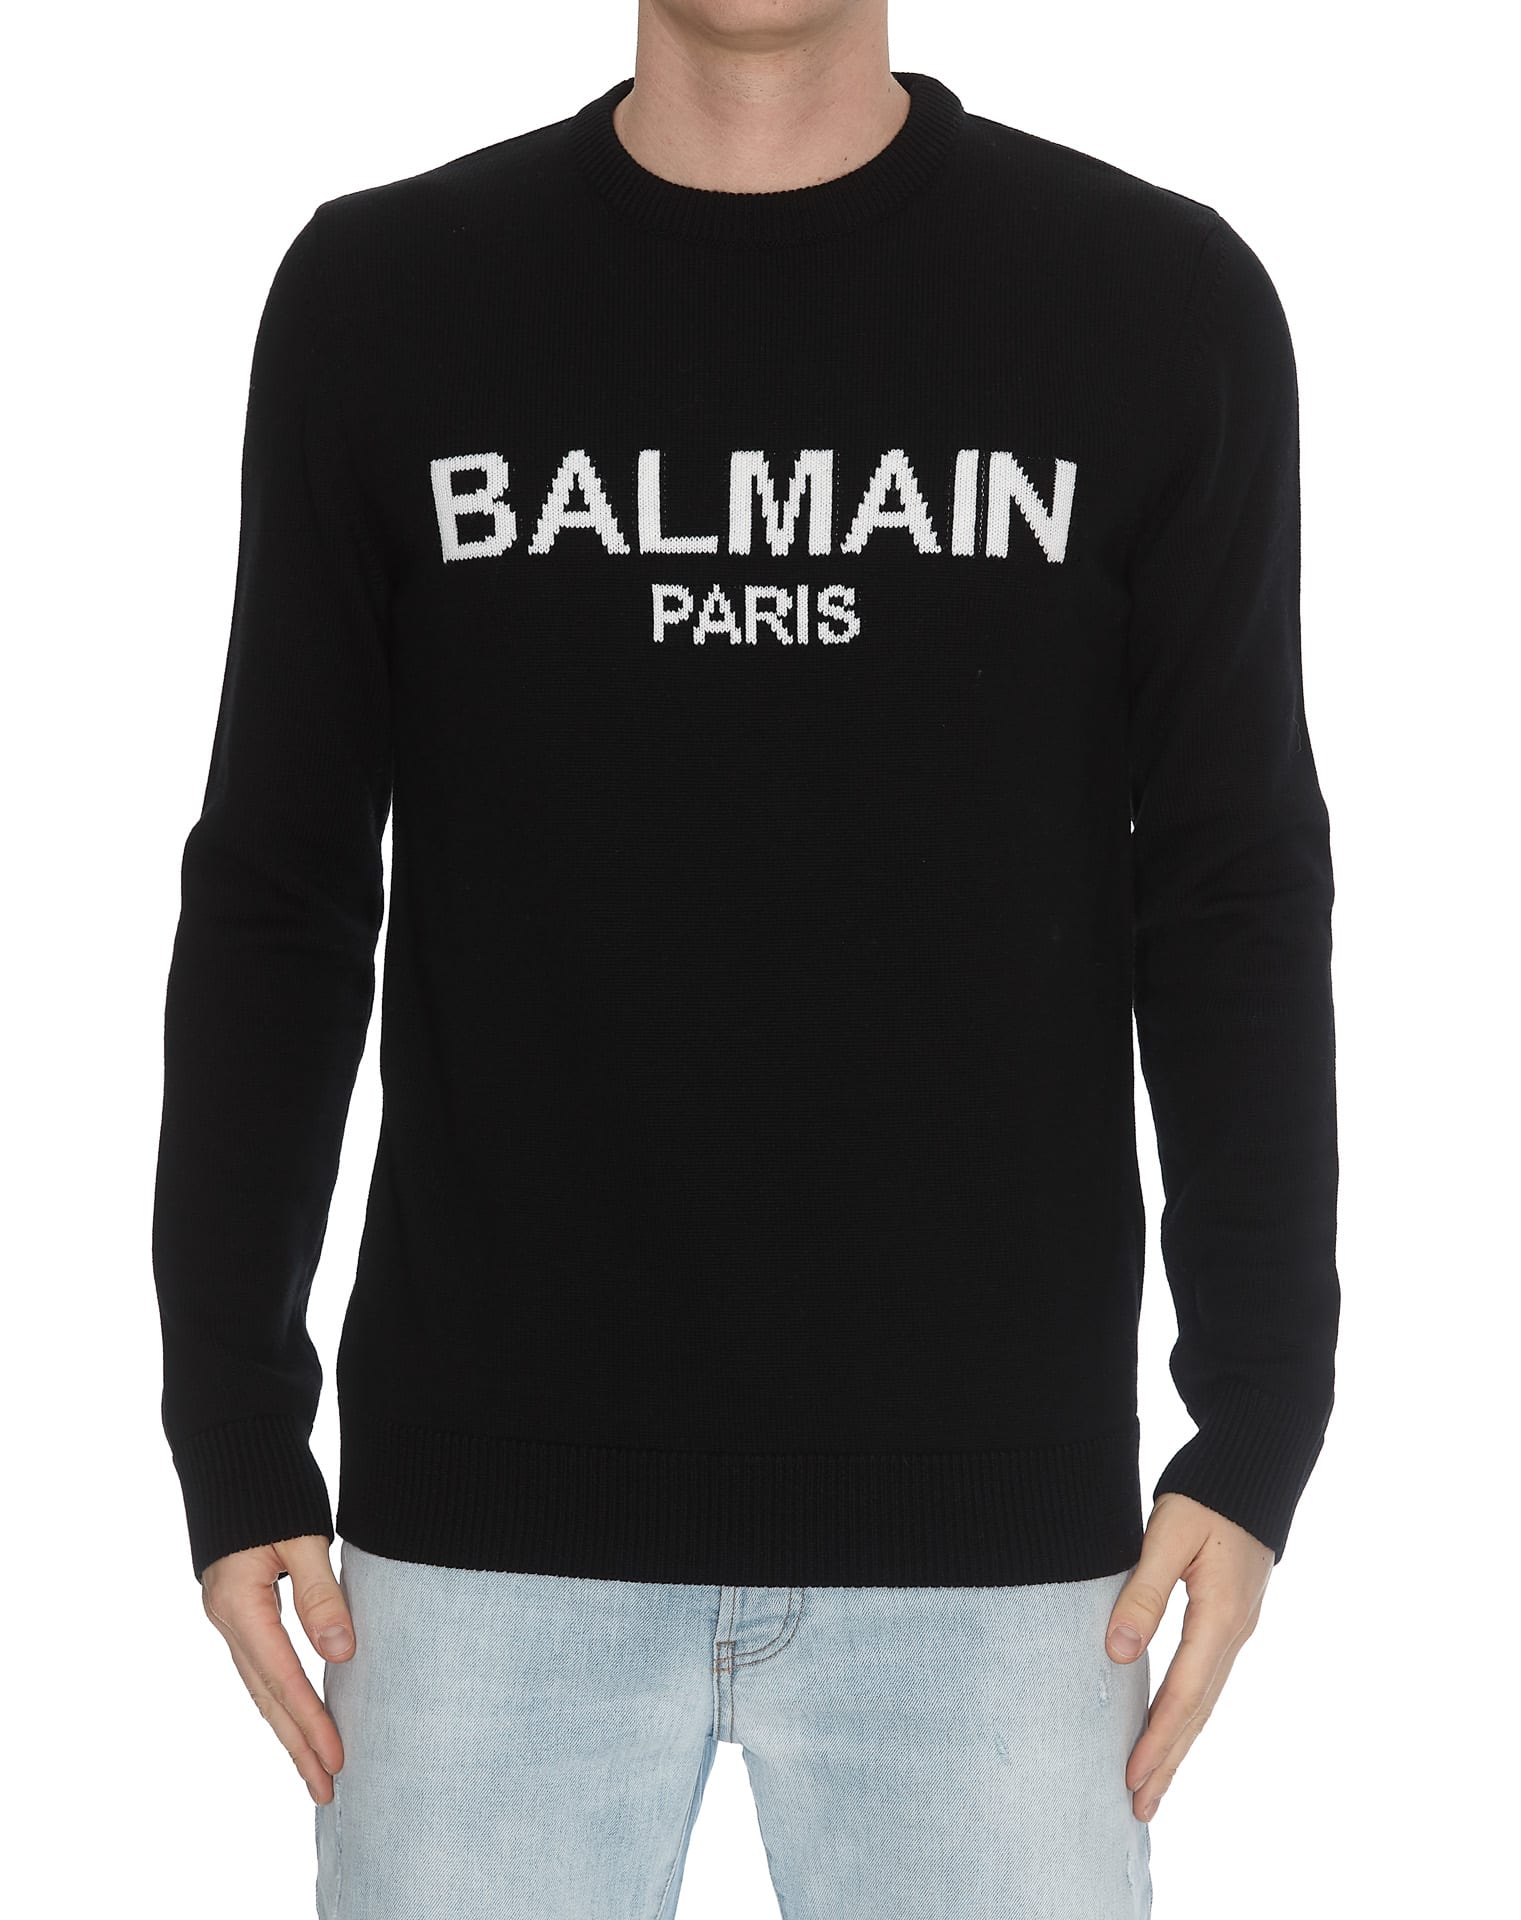 Balmain Balmain Balmain Paris Sweater - Noir/blanc - 10831473 | italist